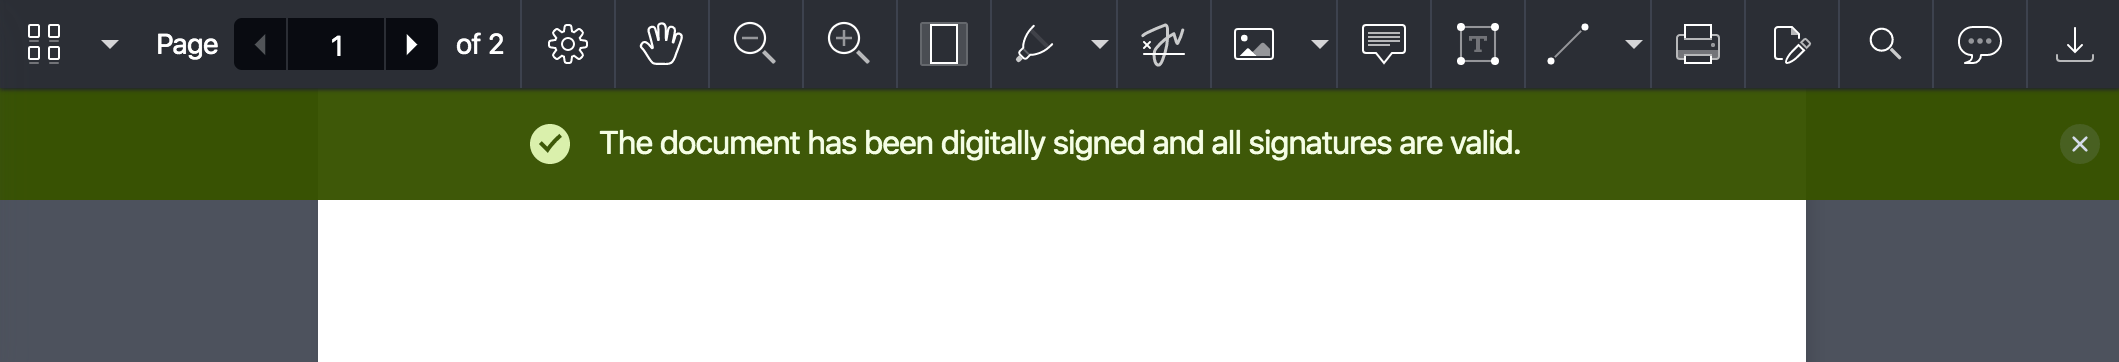 digital signatures validation status bar showing valid signature